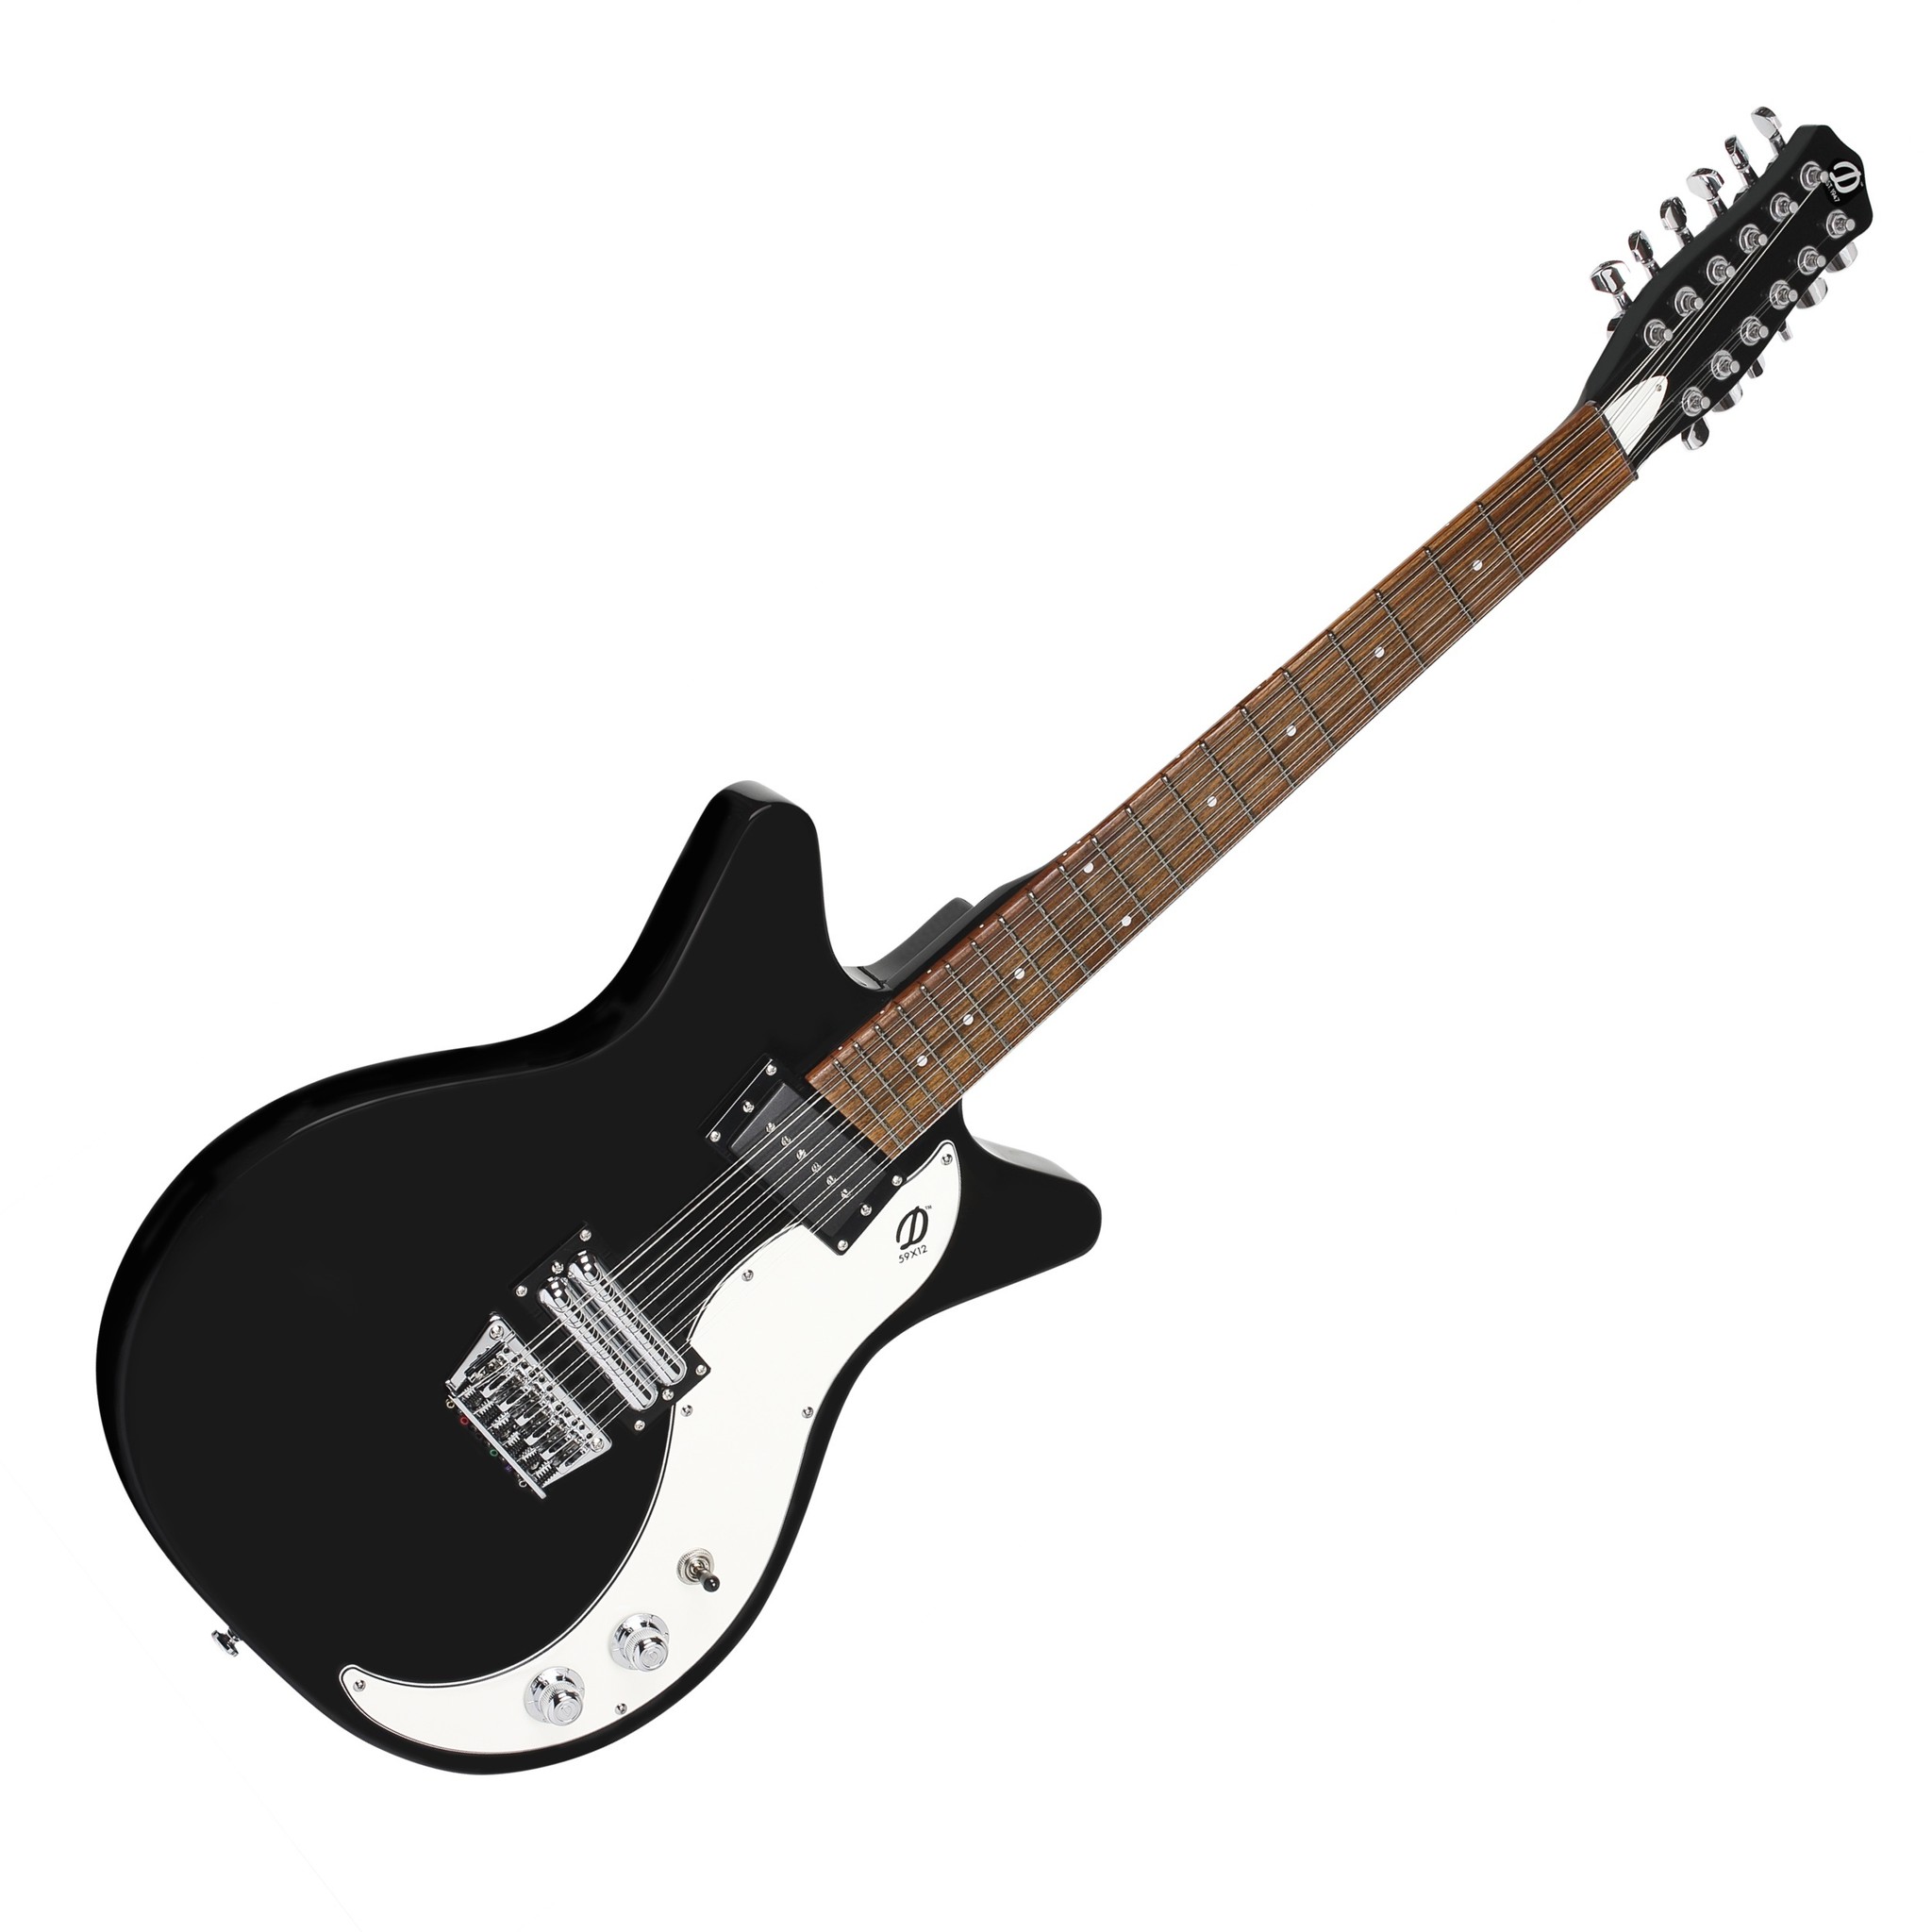 Danelectro '59X12, 12-String, Black with White Pickguard